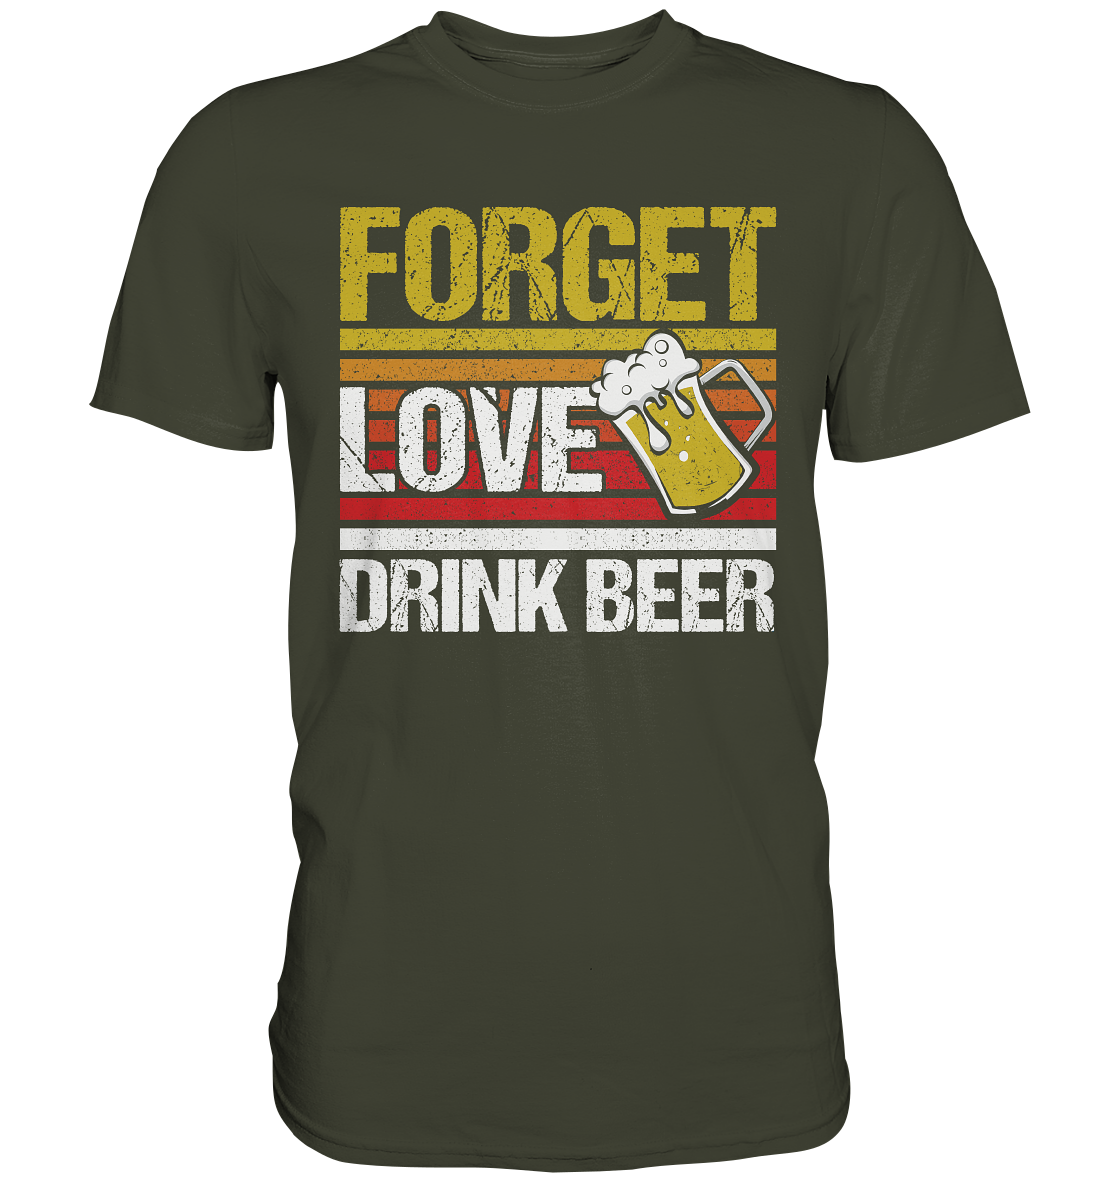 Forget love drink beer - Premium Shirt